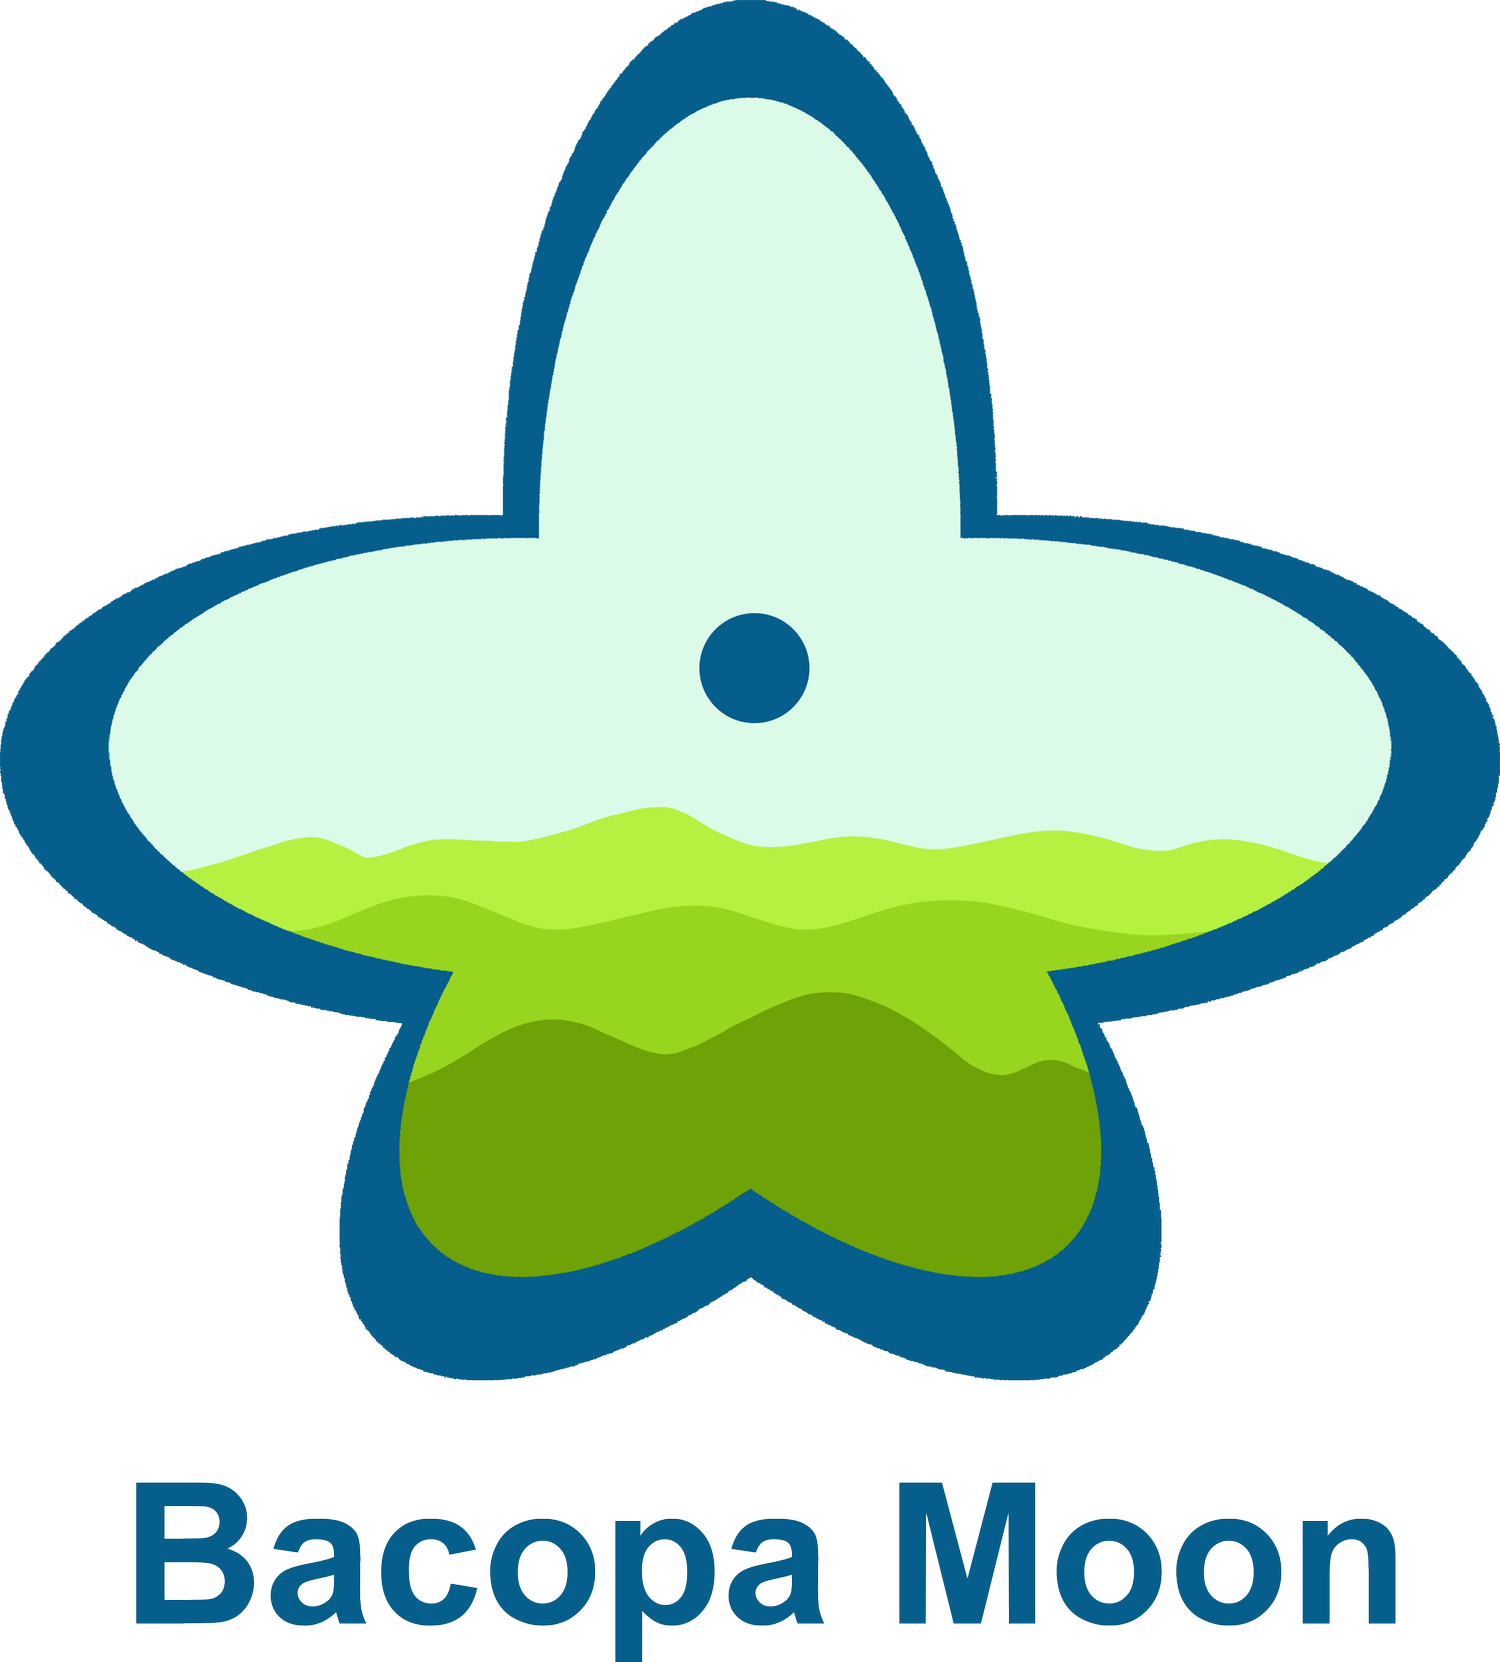 Bacopa Moon